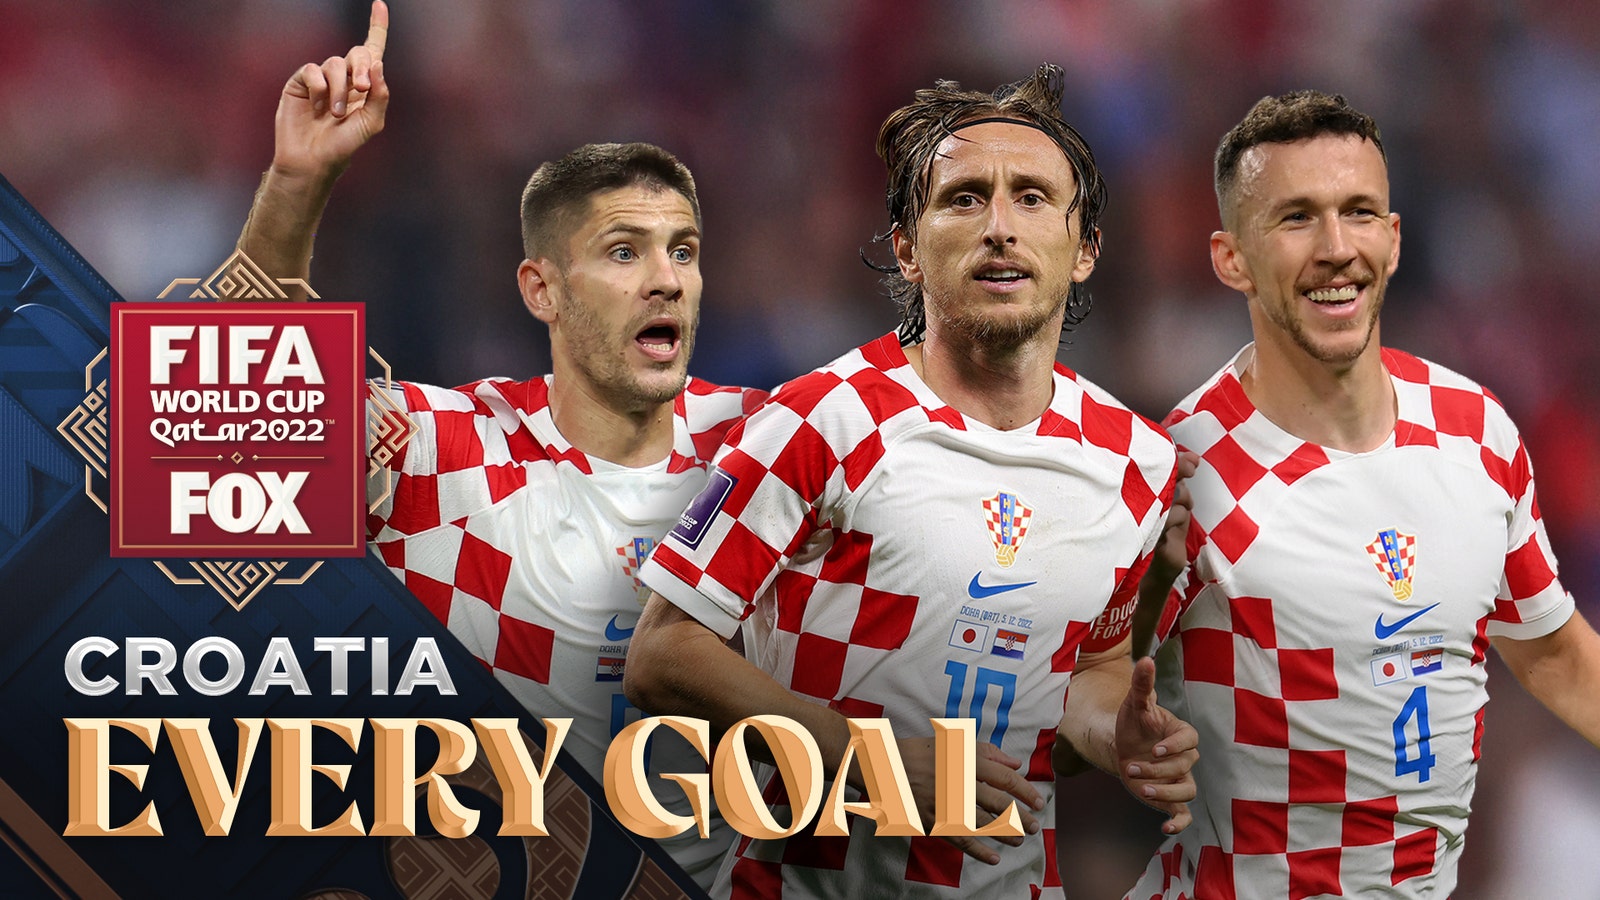 Every World Cup goal by Croatia